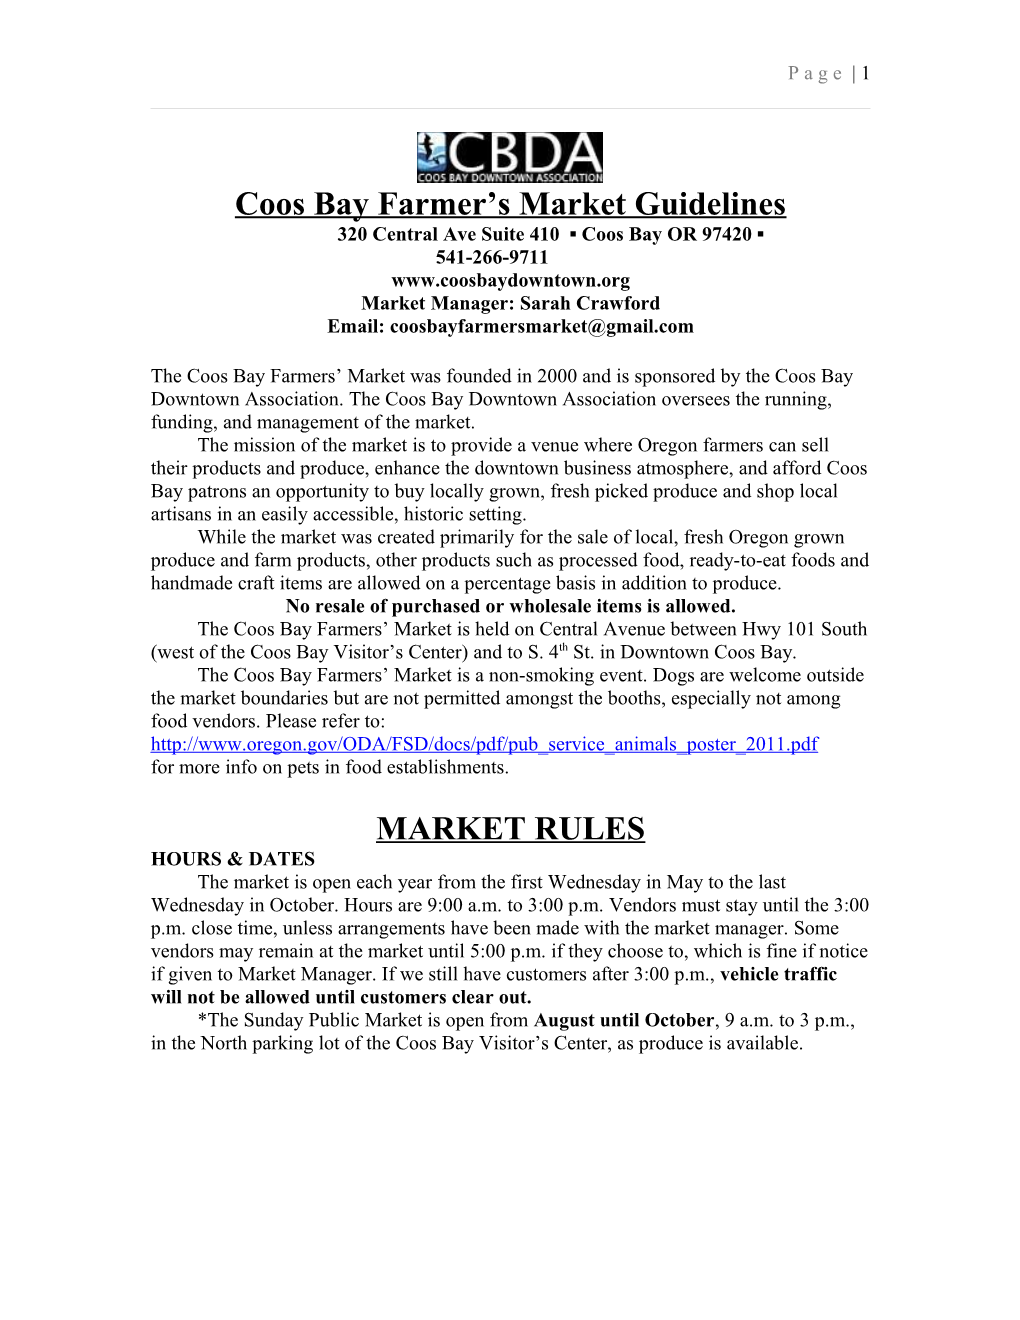 Coos Bay Farmer S Market Guidelines